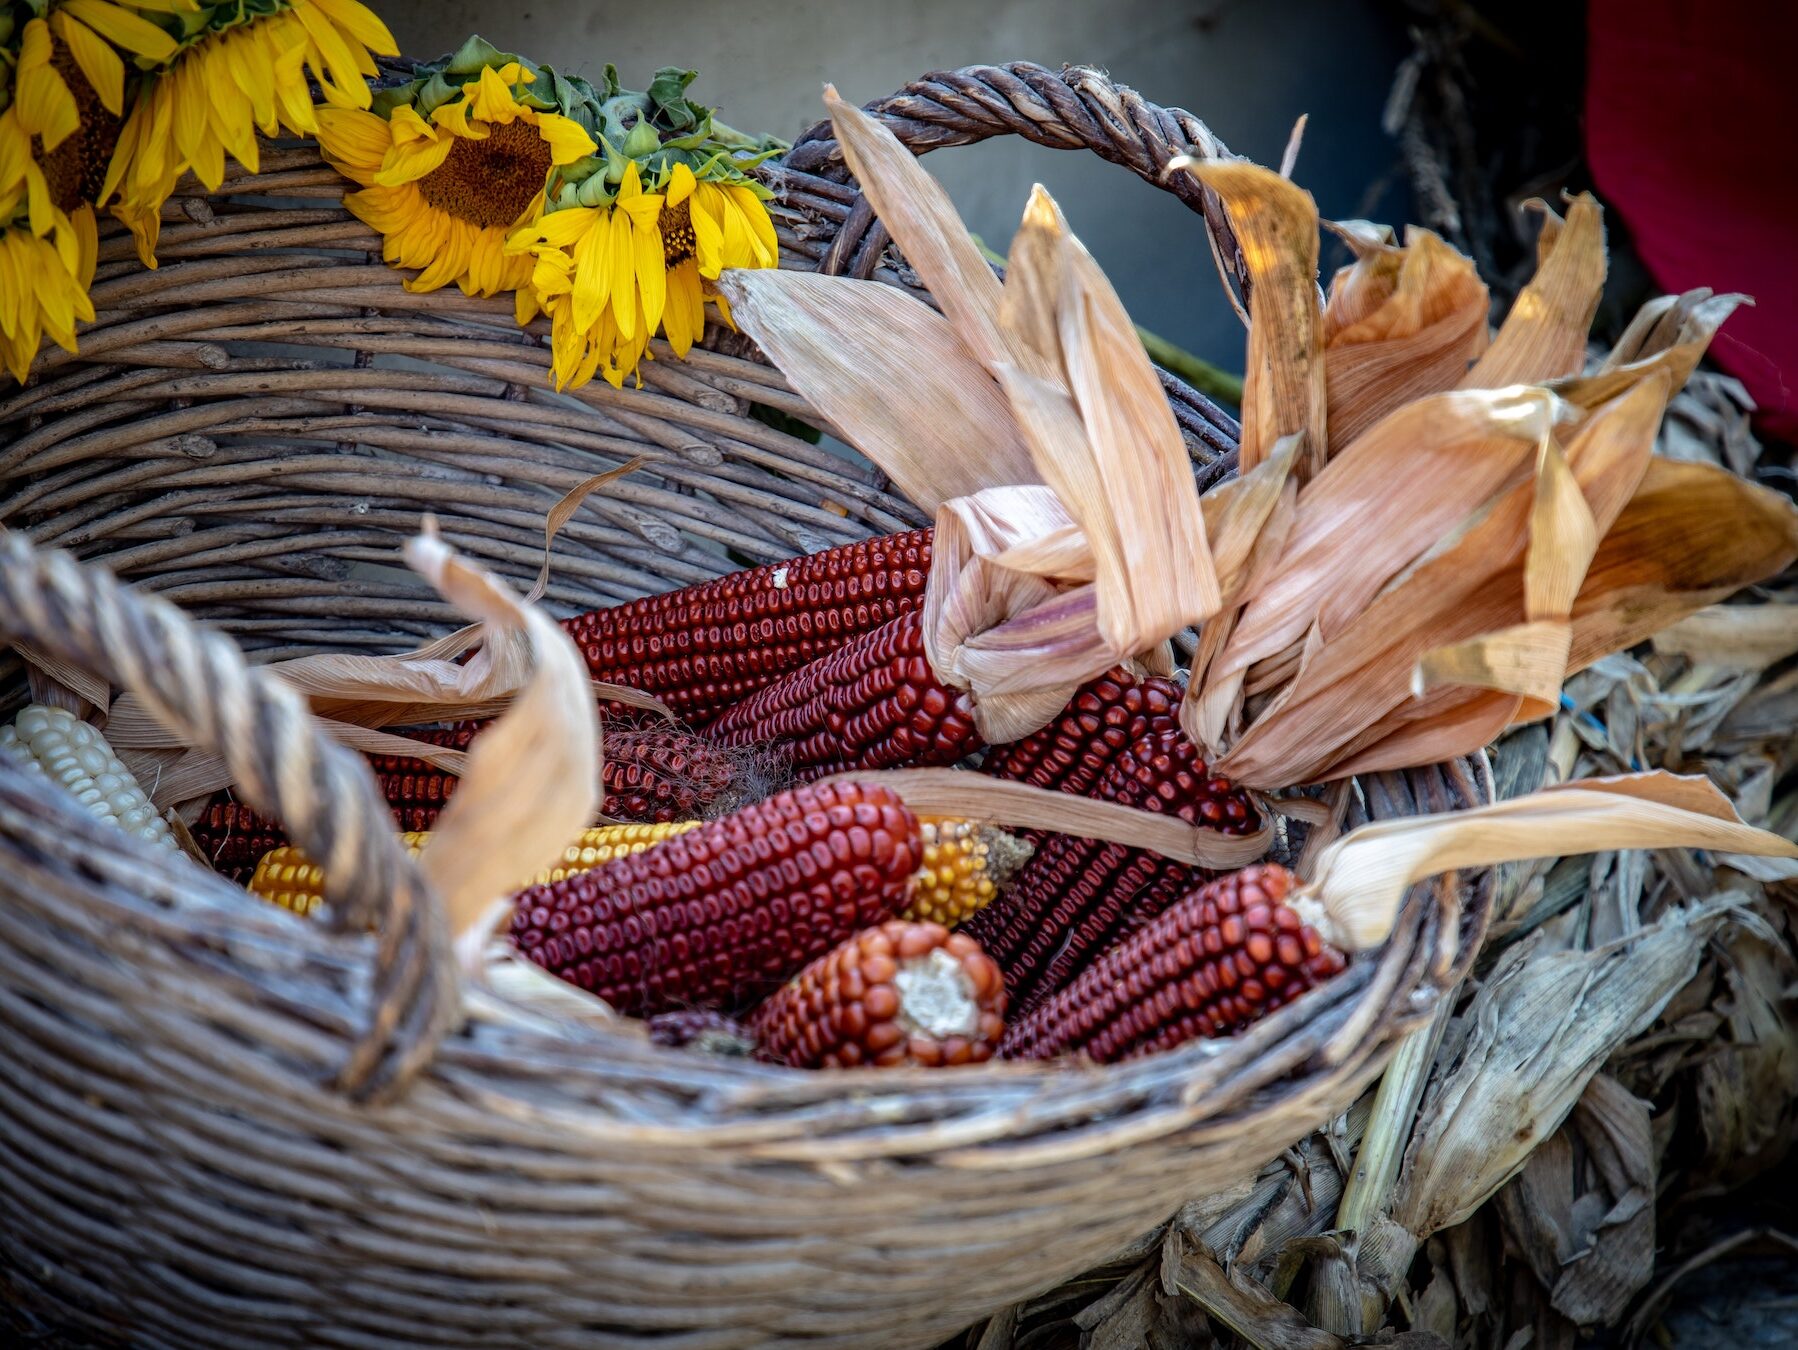 Dried corn cobs in a basket